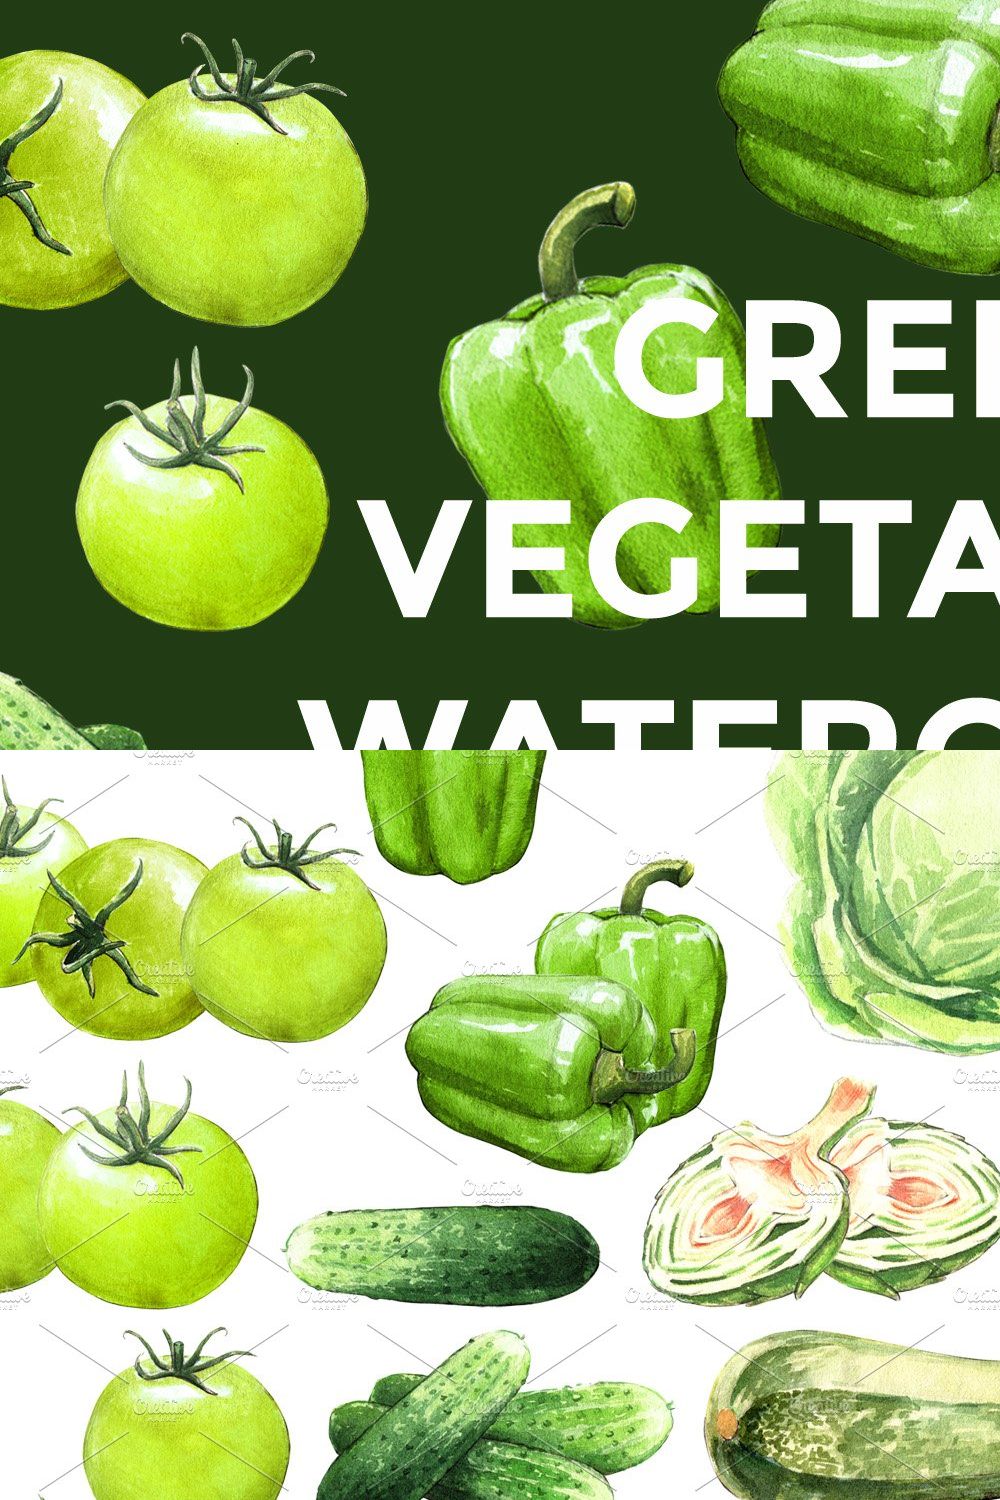 Green Vegetables watercolor big set pinterest preview image.